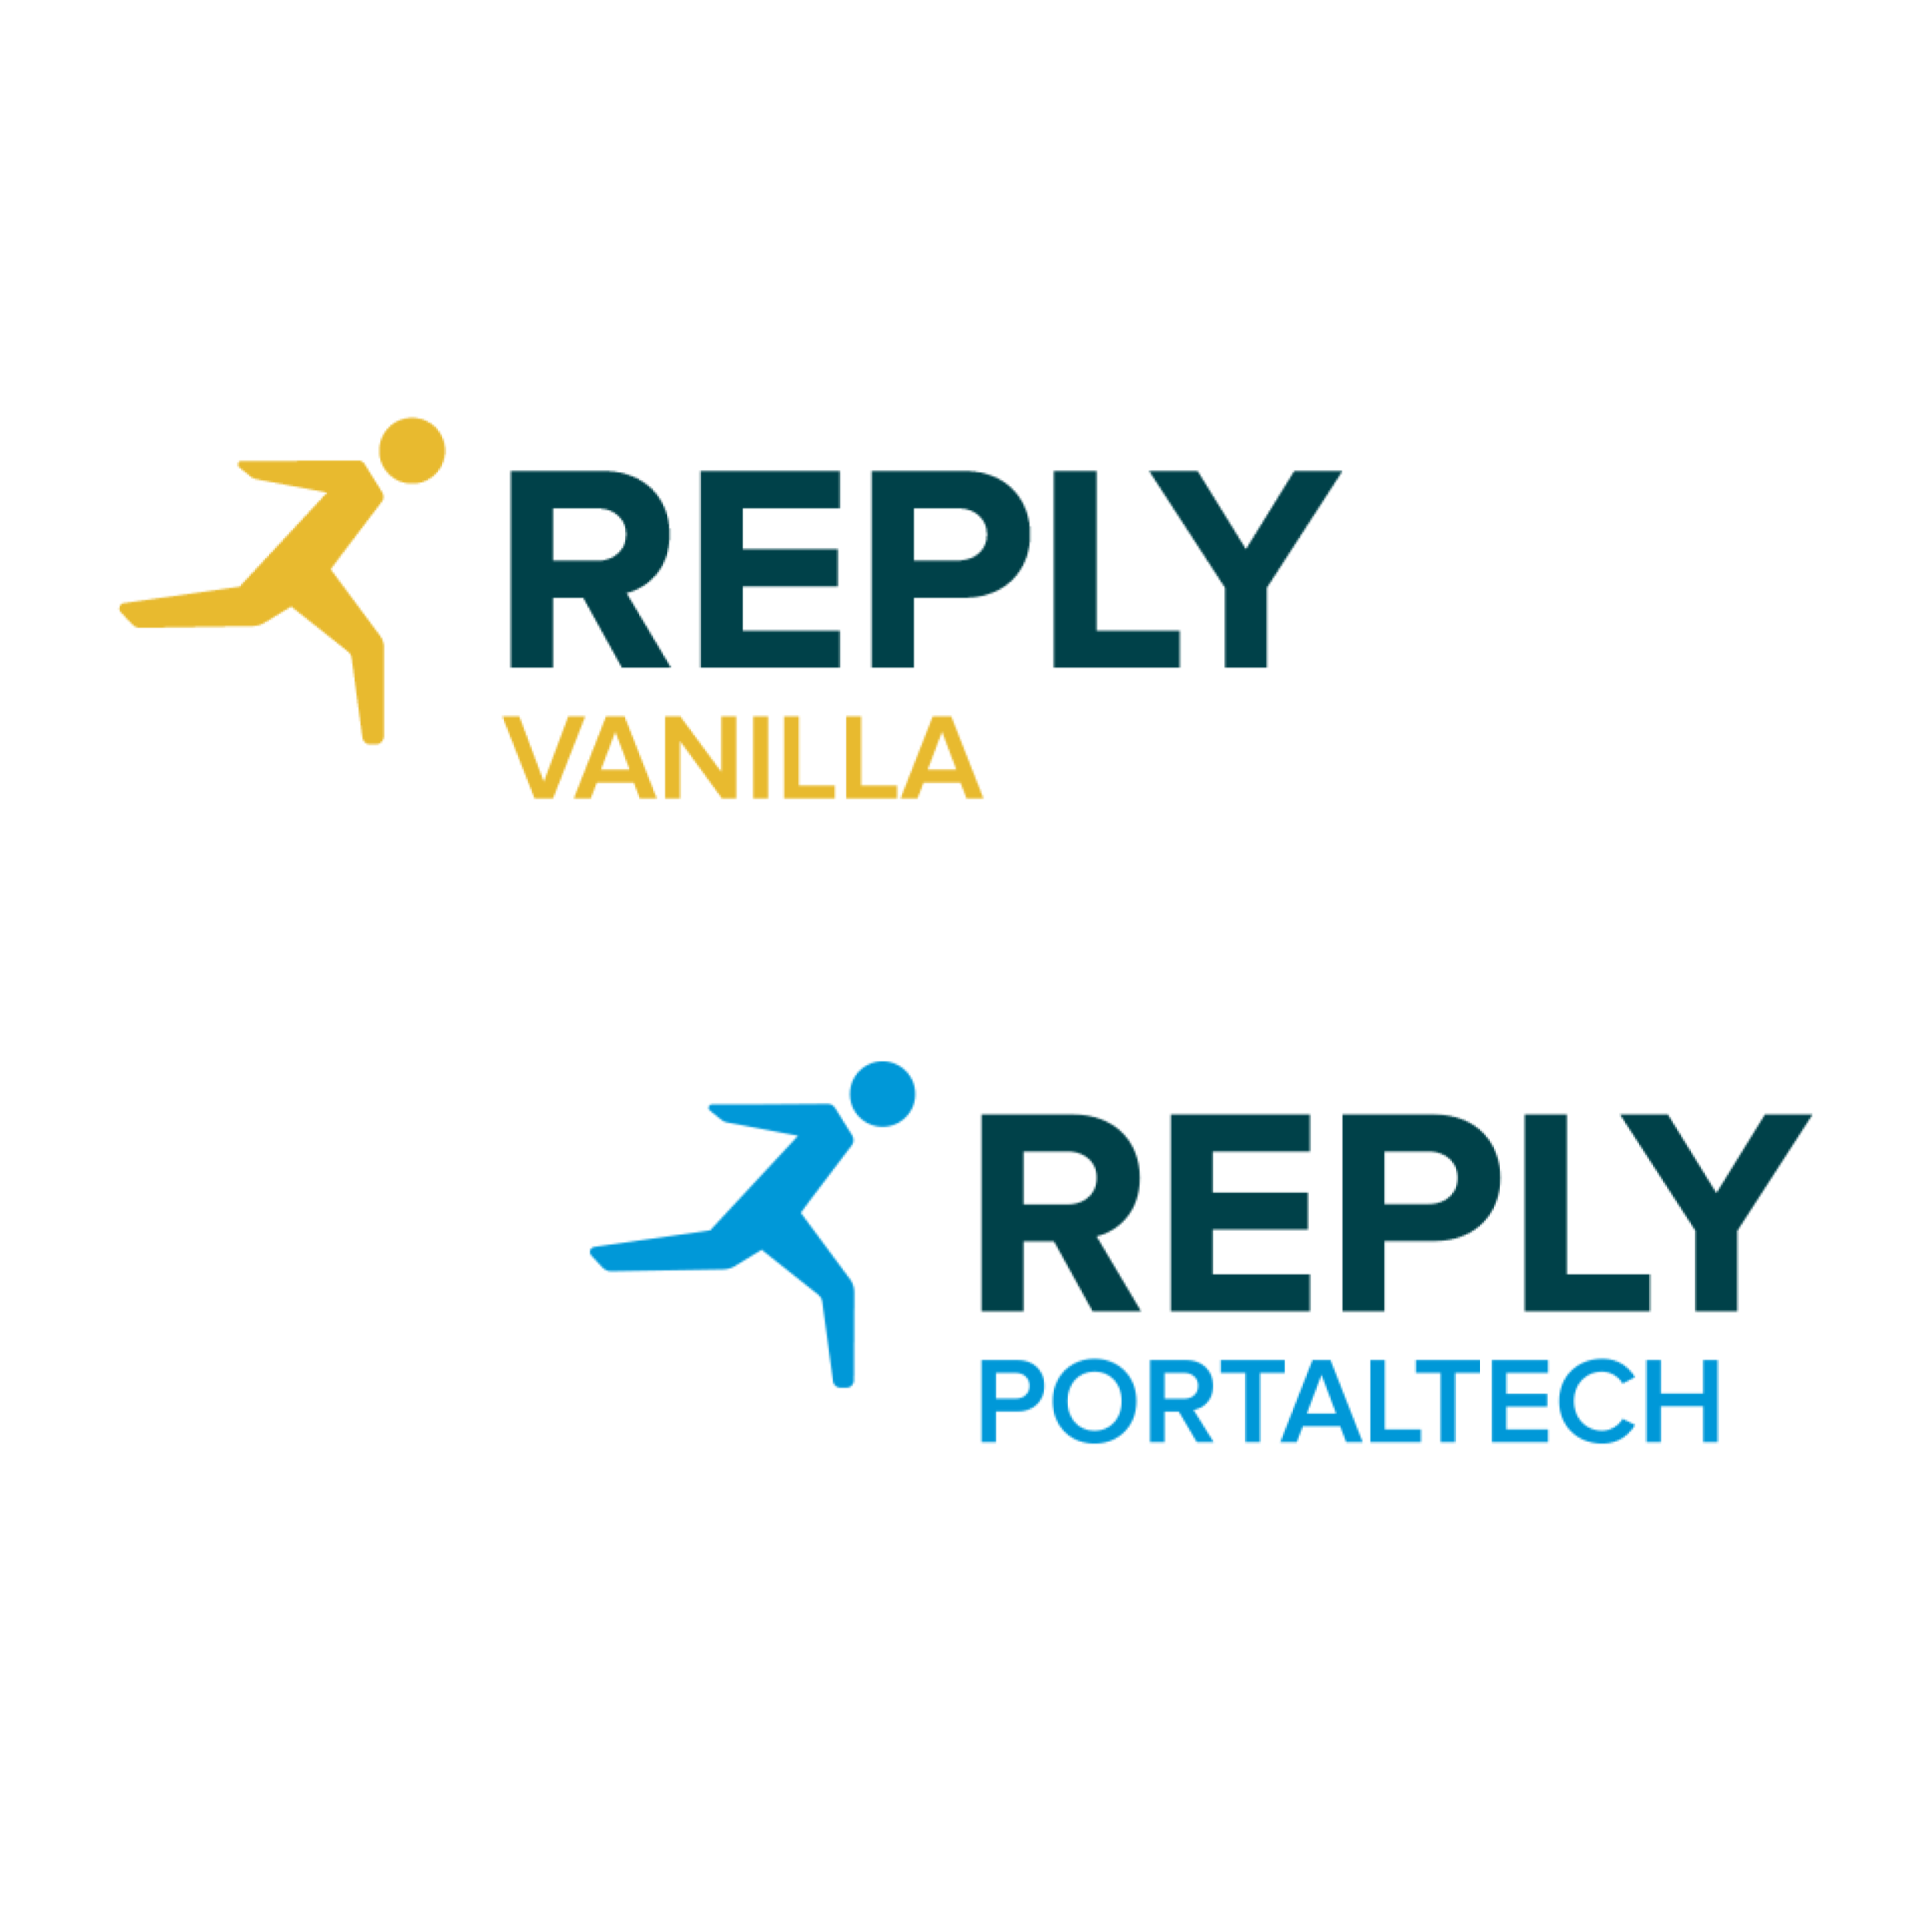 Vanilla Reply GmbH